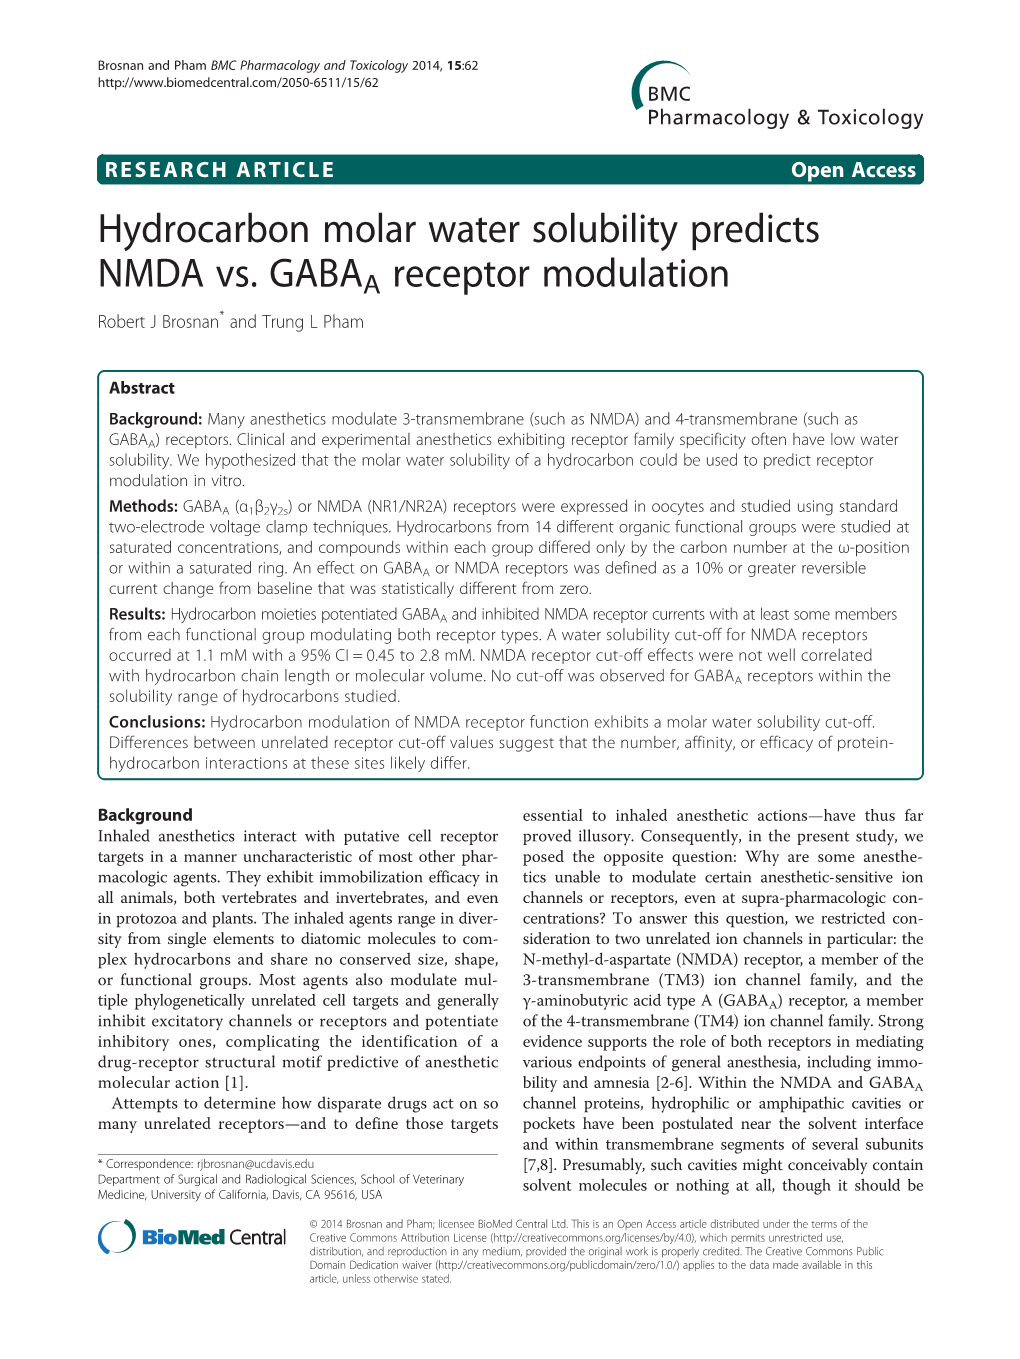 Hydrocarbon Molar Water Solubility Predicts NMDA Vs. GABAA Receptor Modulation Robert J Brosnan* and Trung L Pham